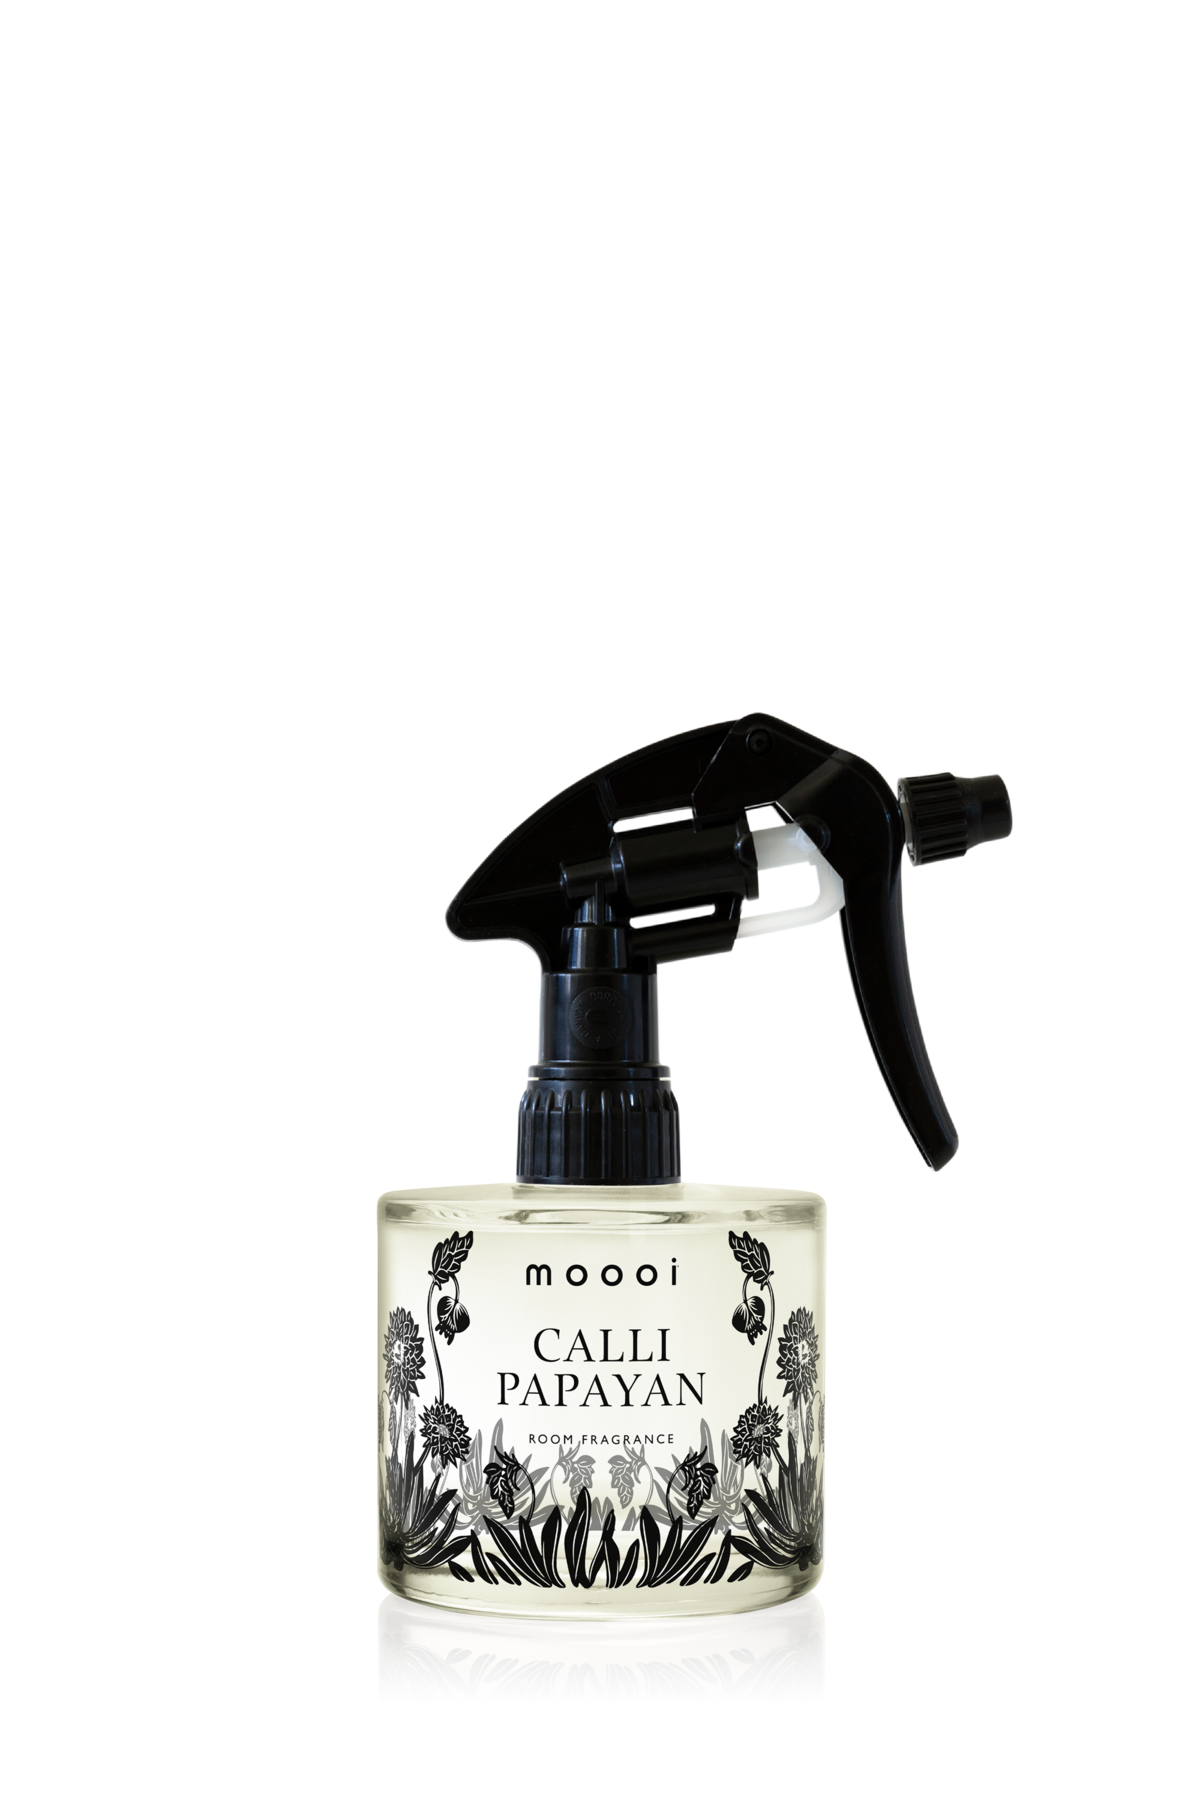 Calli Papayan room spray bottle 